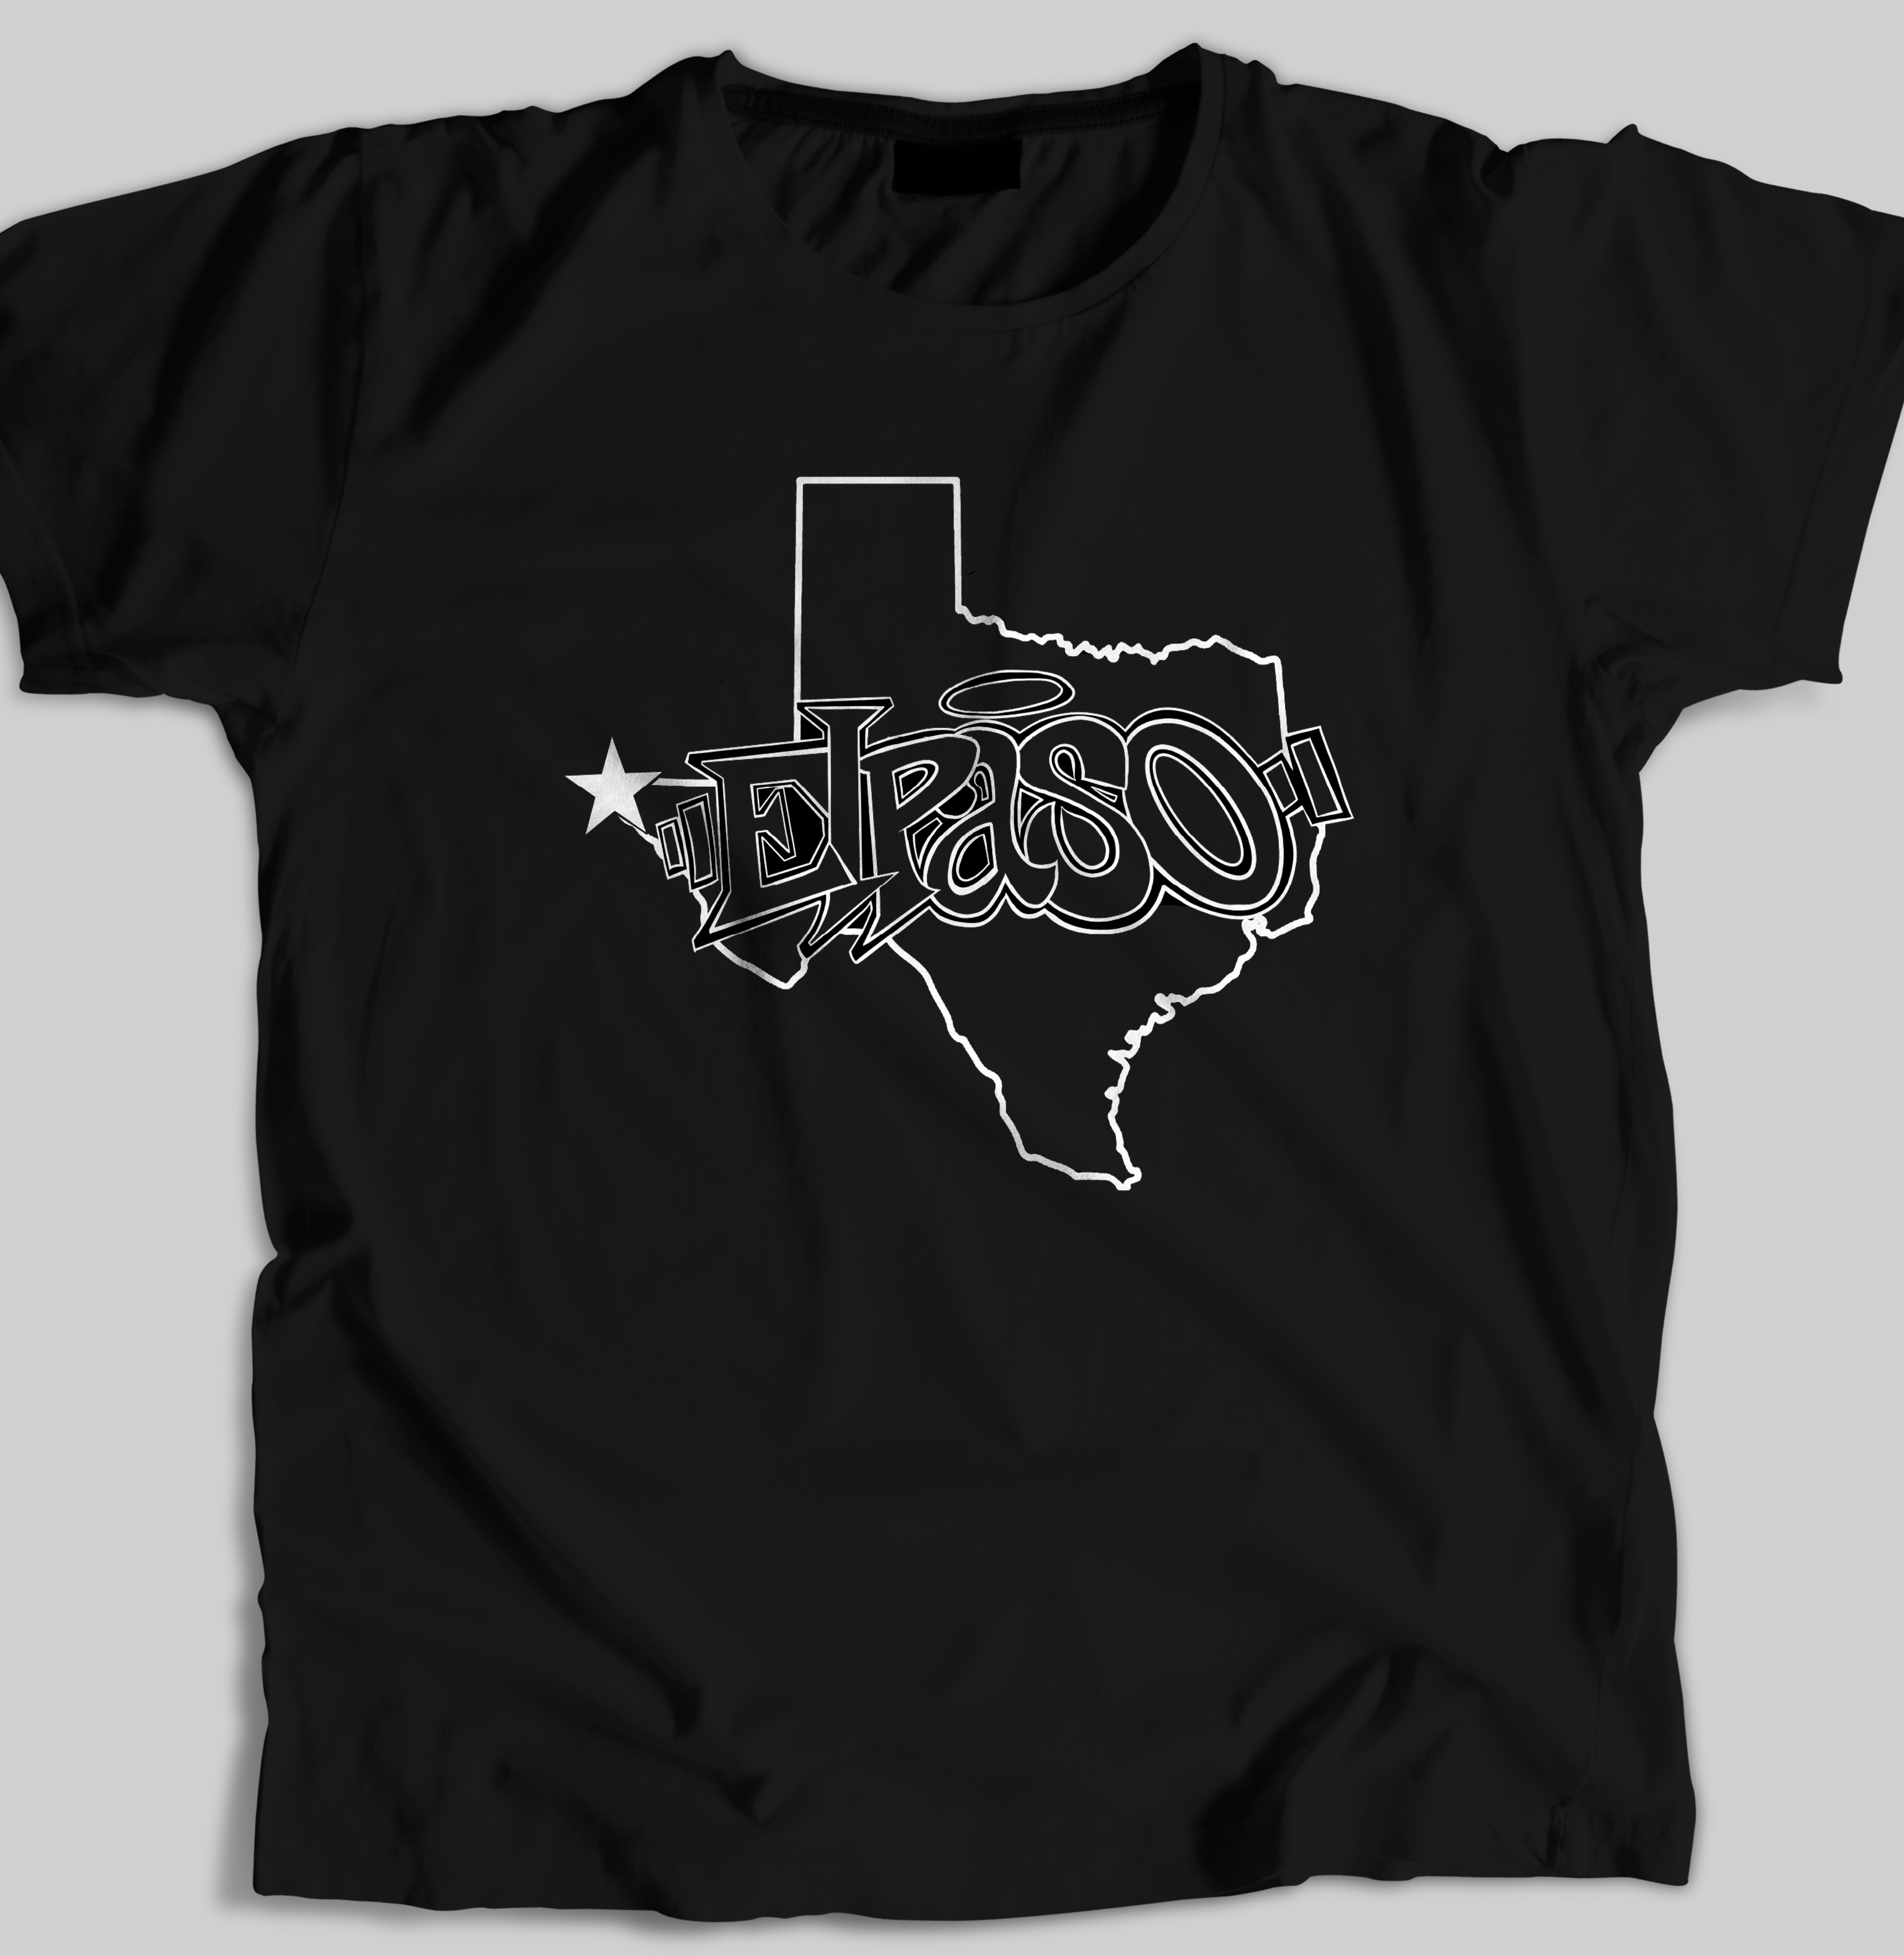 "Texas Graff" Men's T-shirt (Black) by DoEP